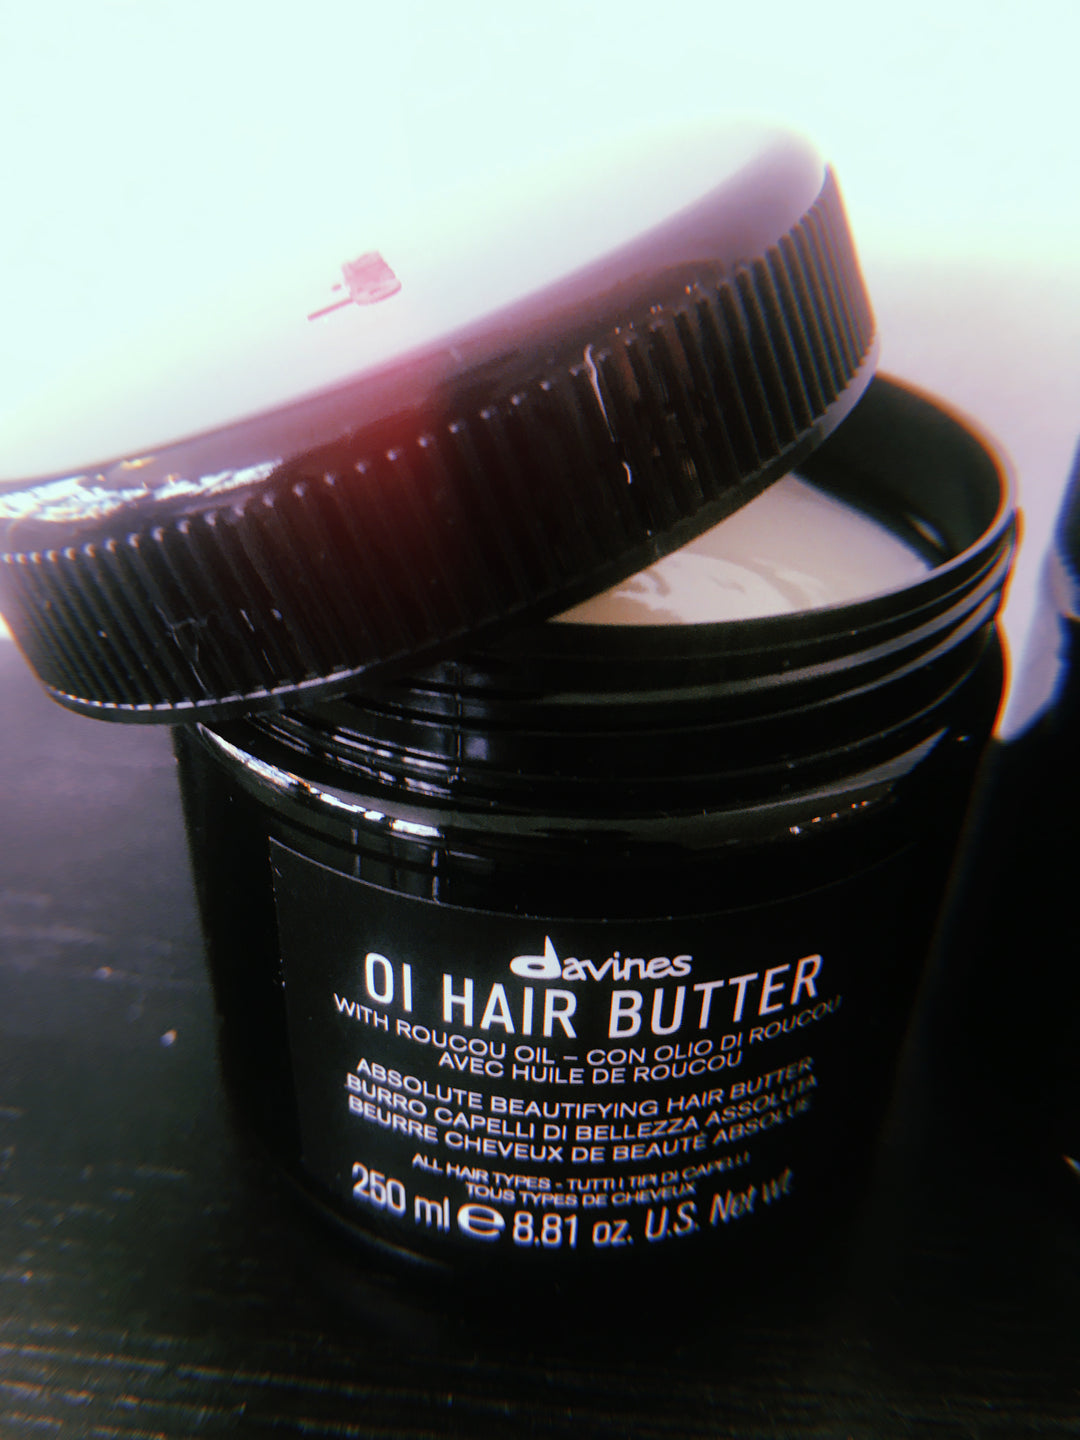 Twentyseven Toronto - Davines OI Hair Butter - Full Size (250ml)